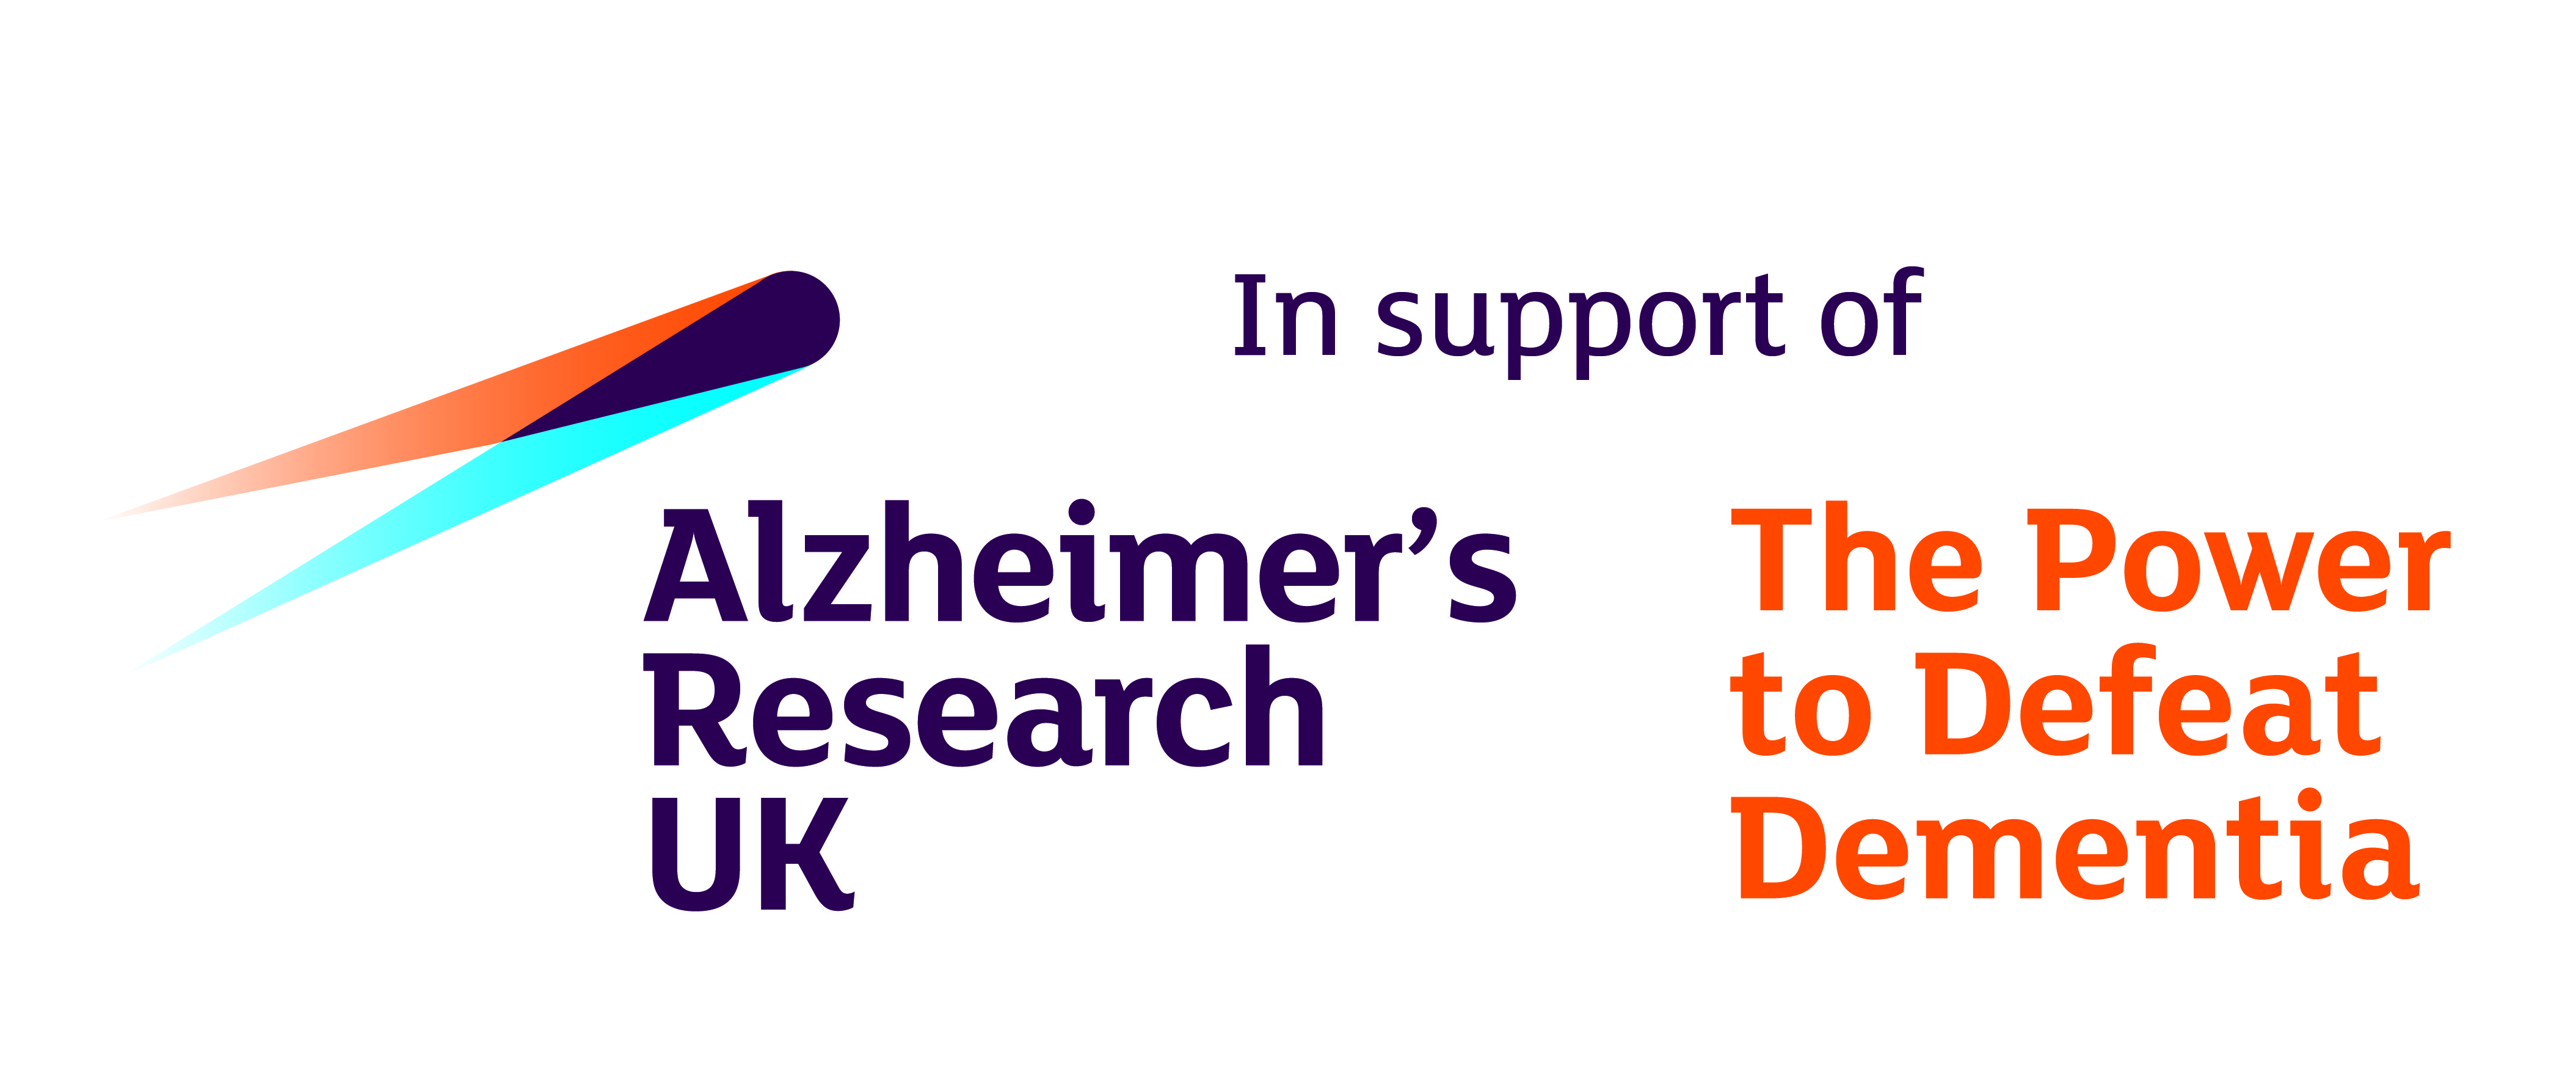 Alzheimers Research UK